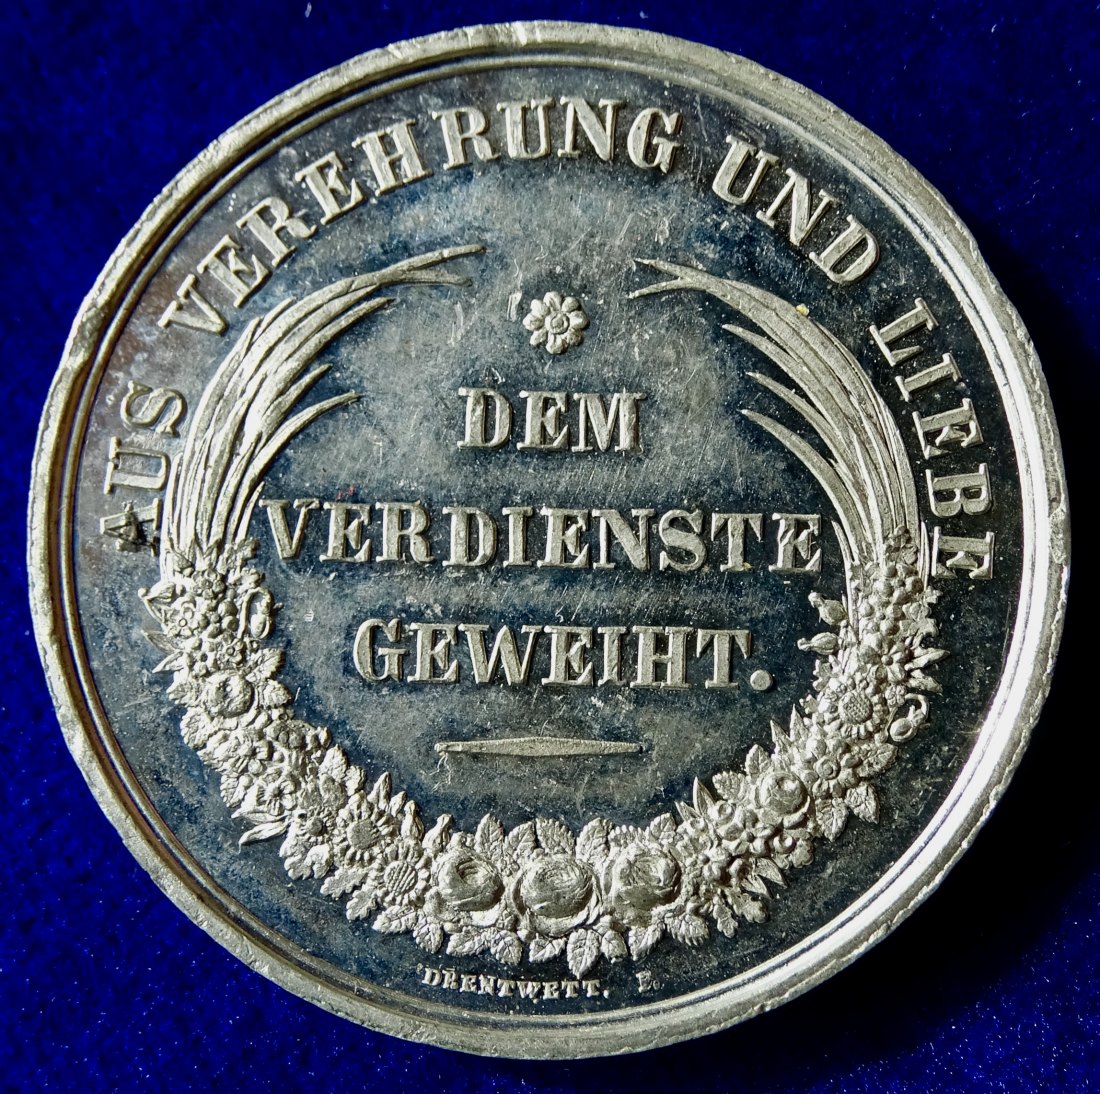  Frankfurt am Main 1848 Reichsverweser-Wahl Medaille @ Paulskirchen Parlament Johann v. Österreich   